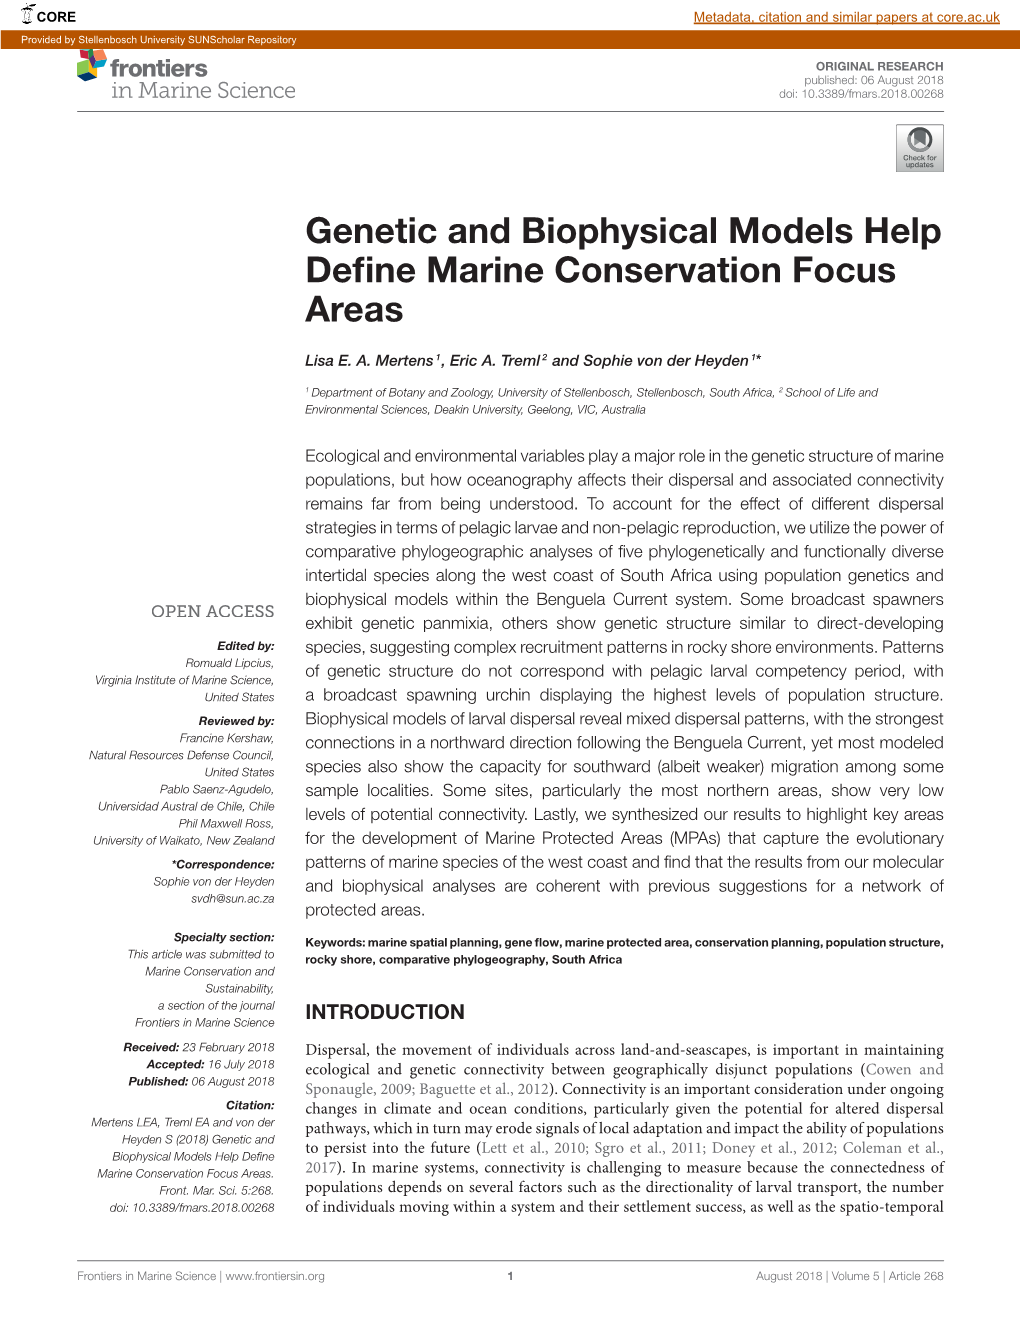 Genetic and Biophysical Models Help Define Marine Conservation Focus